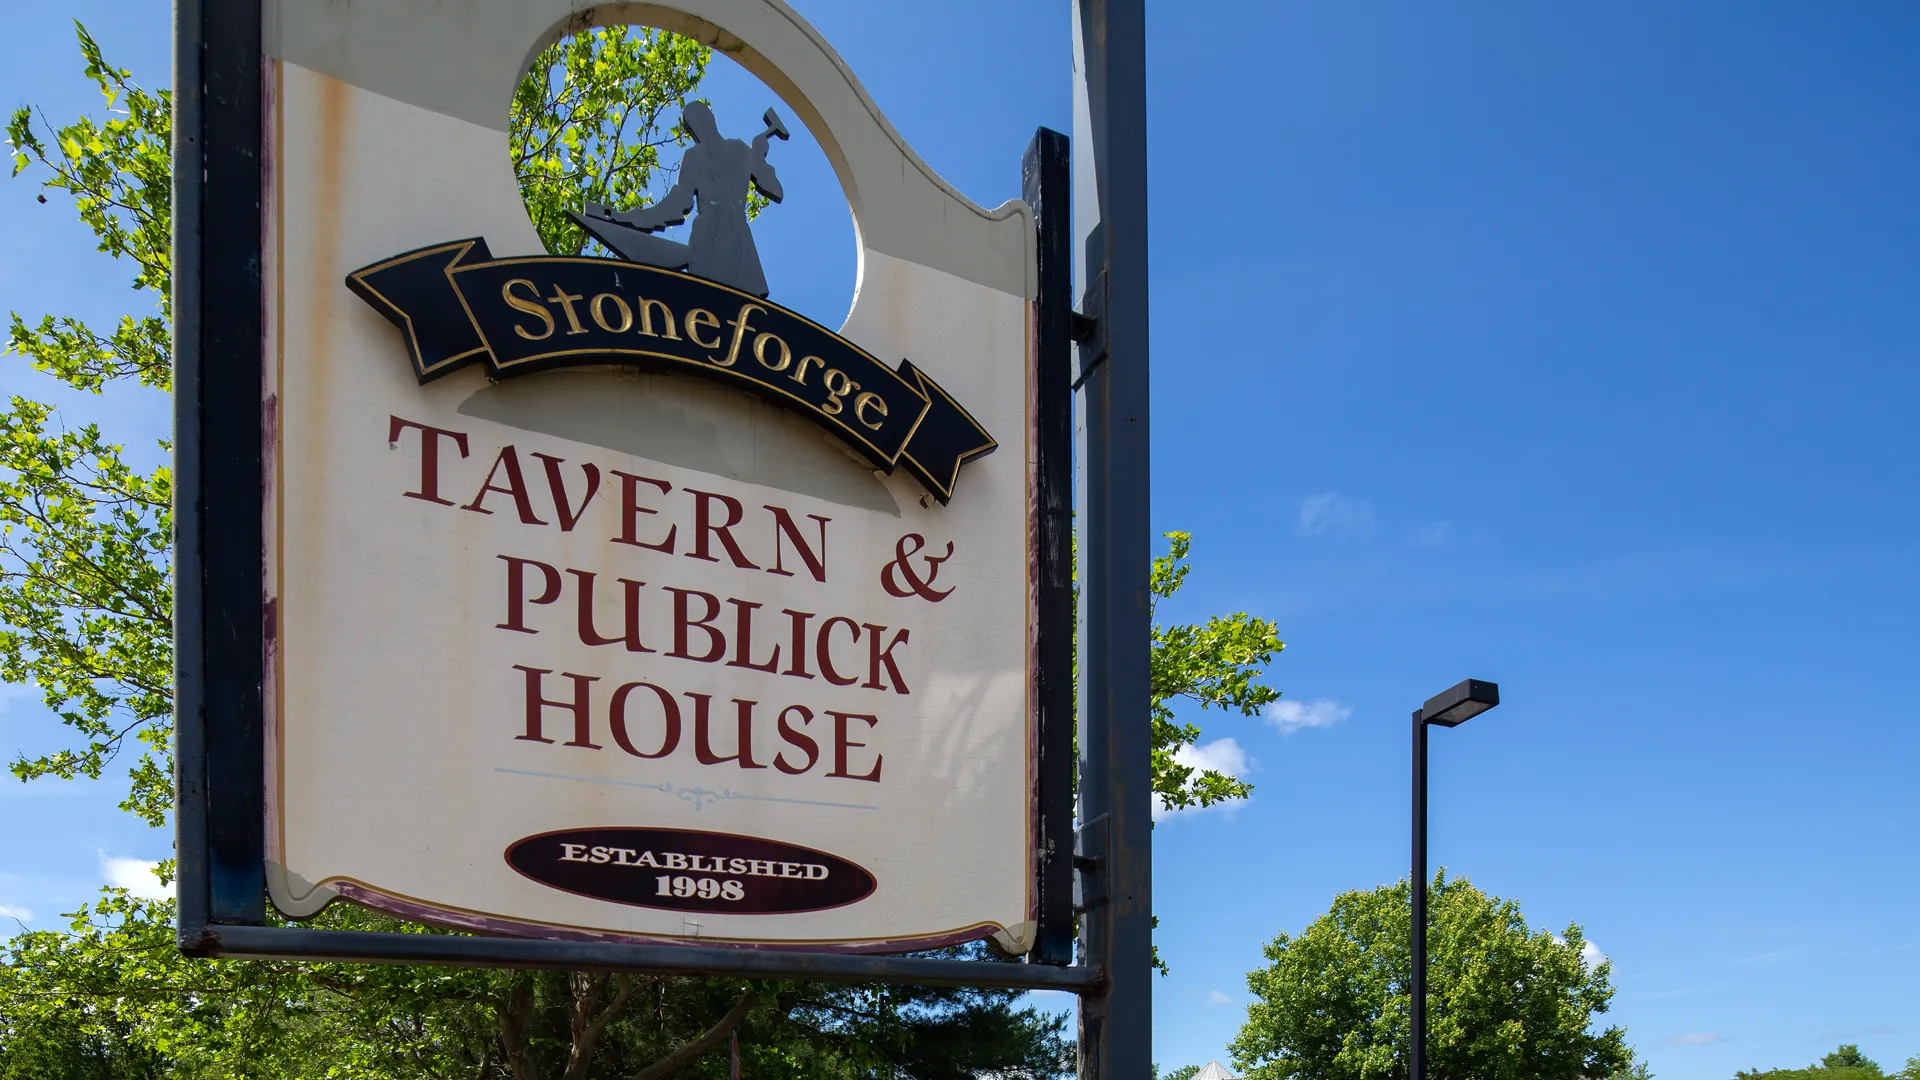 Stoneforge Tavern & Publick House